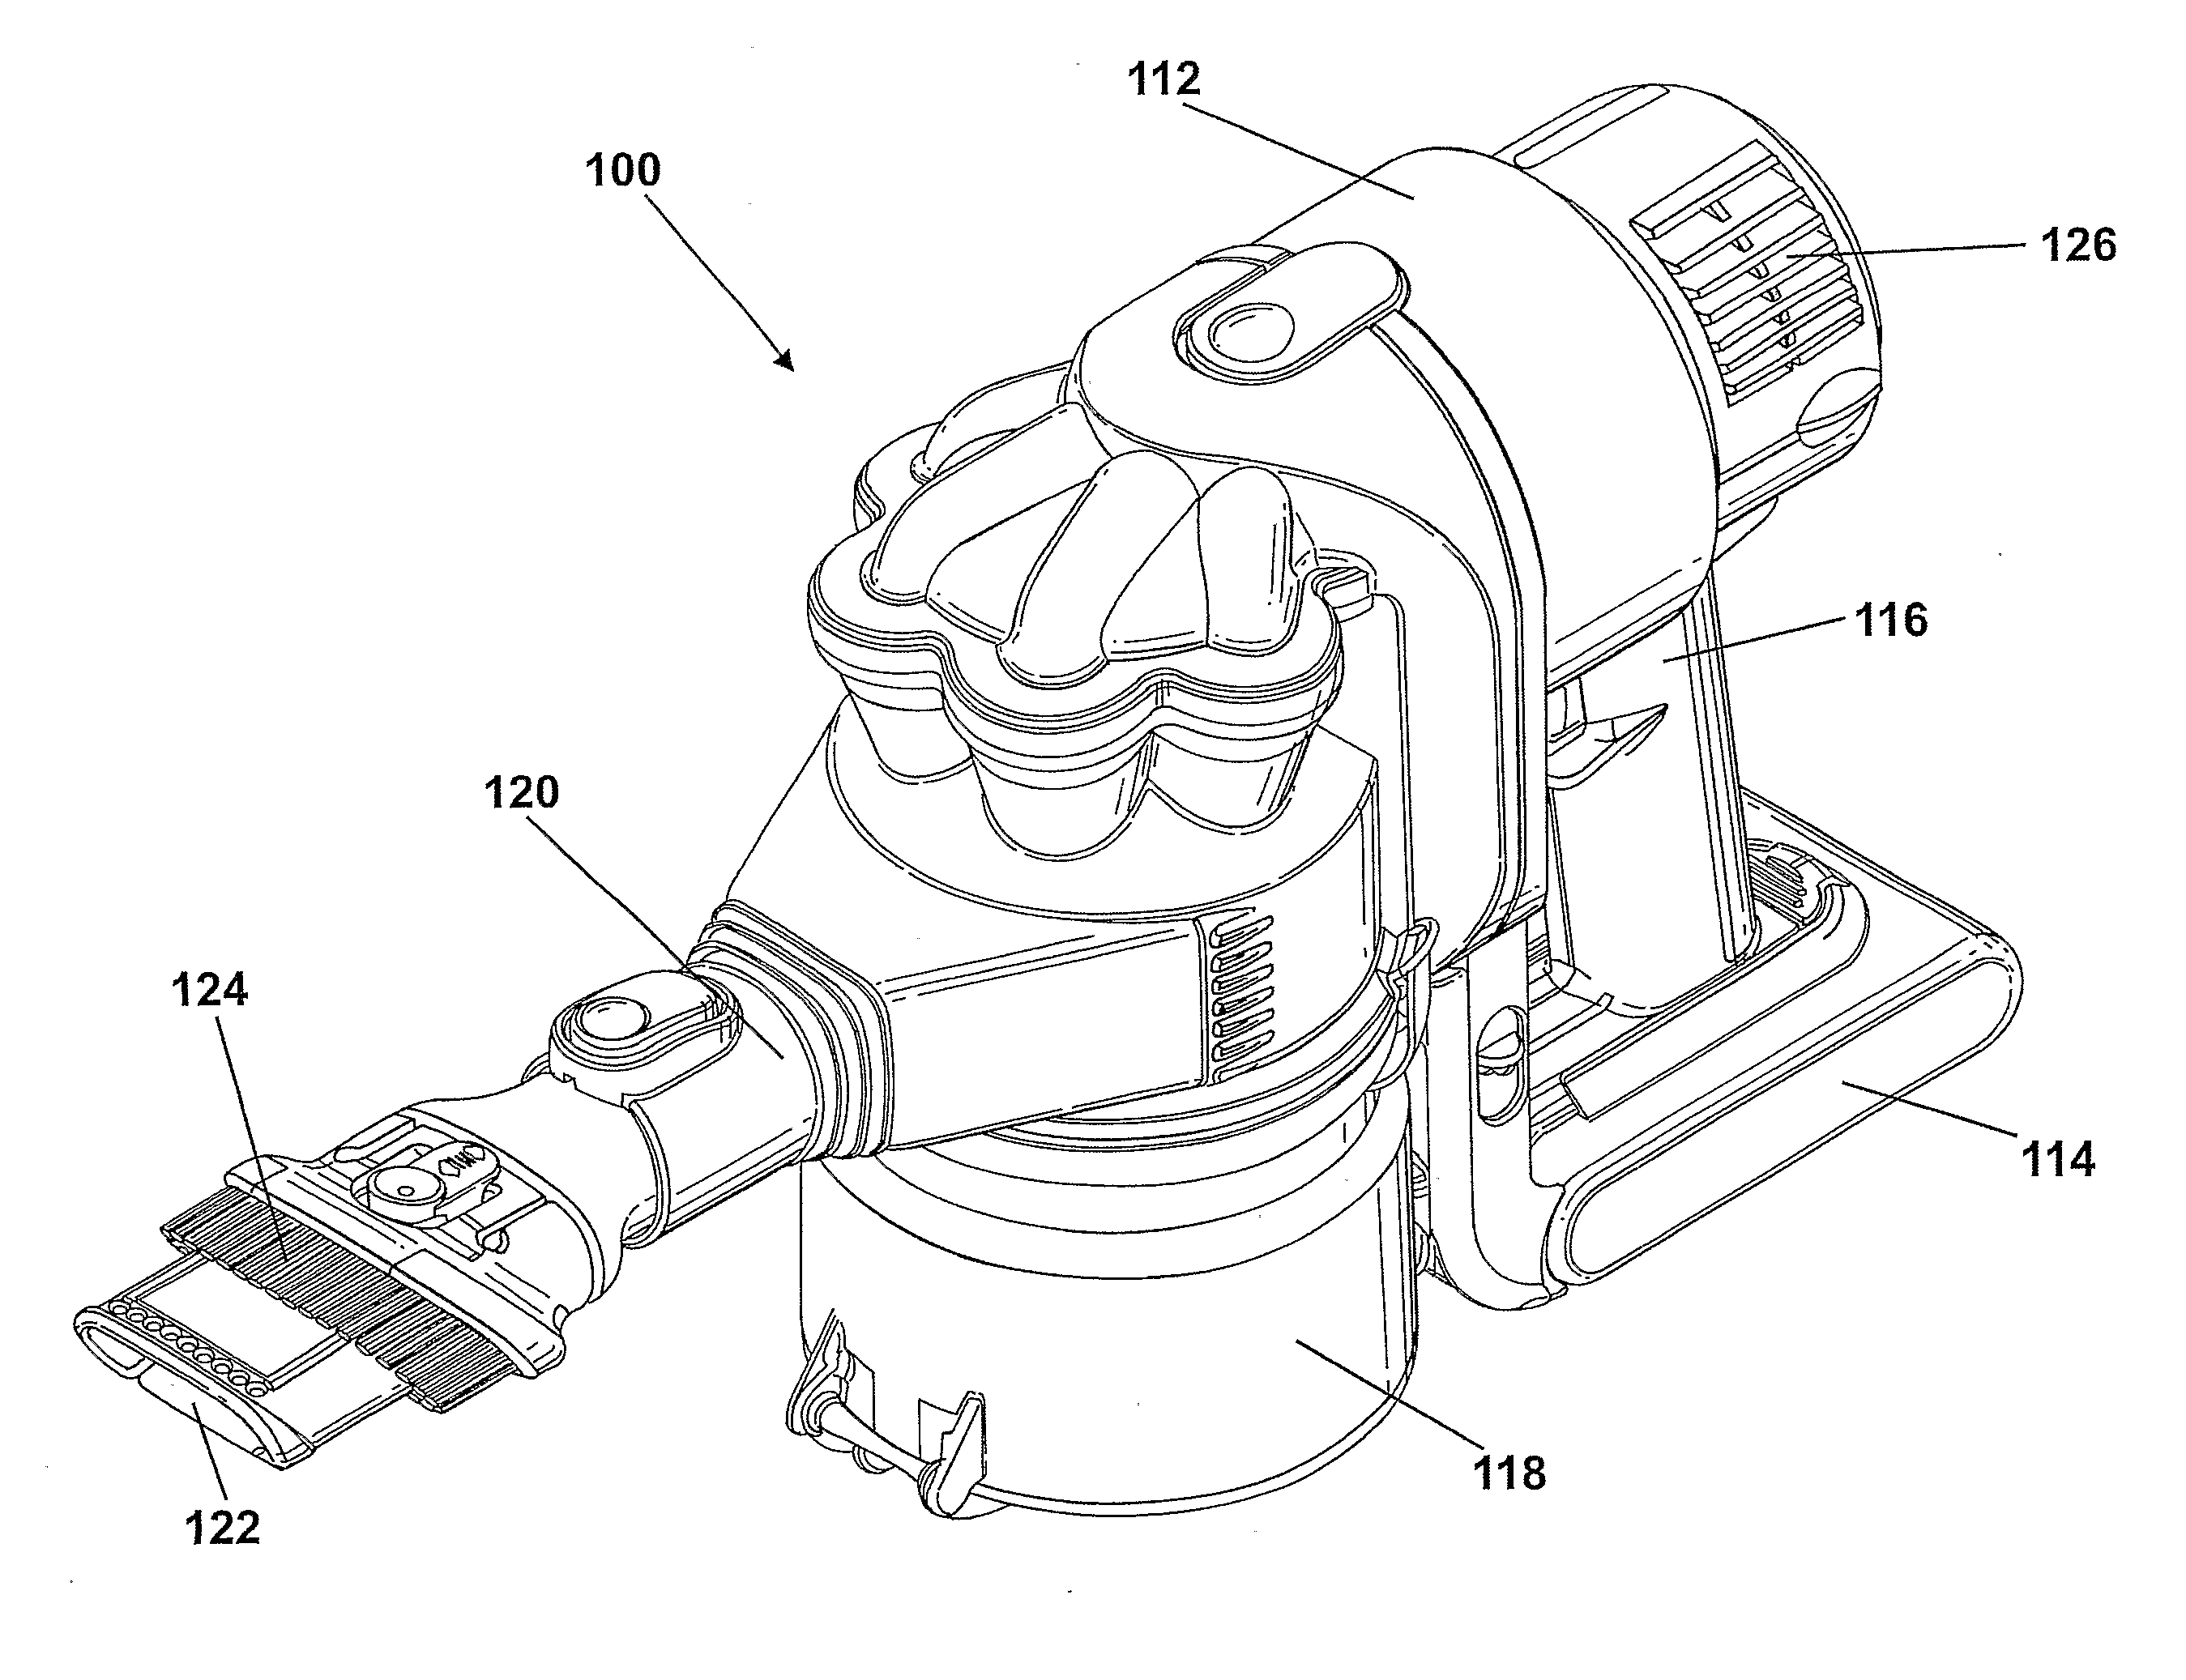 Motor driving apparatus